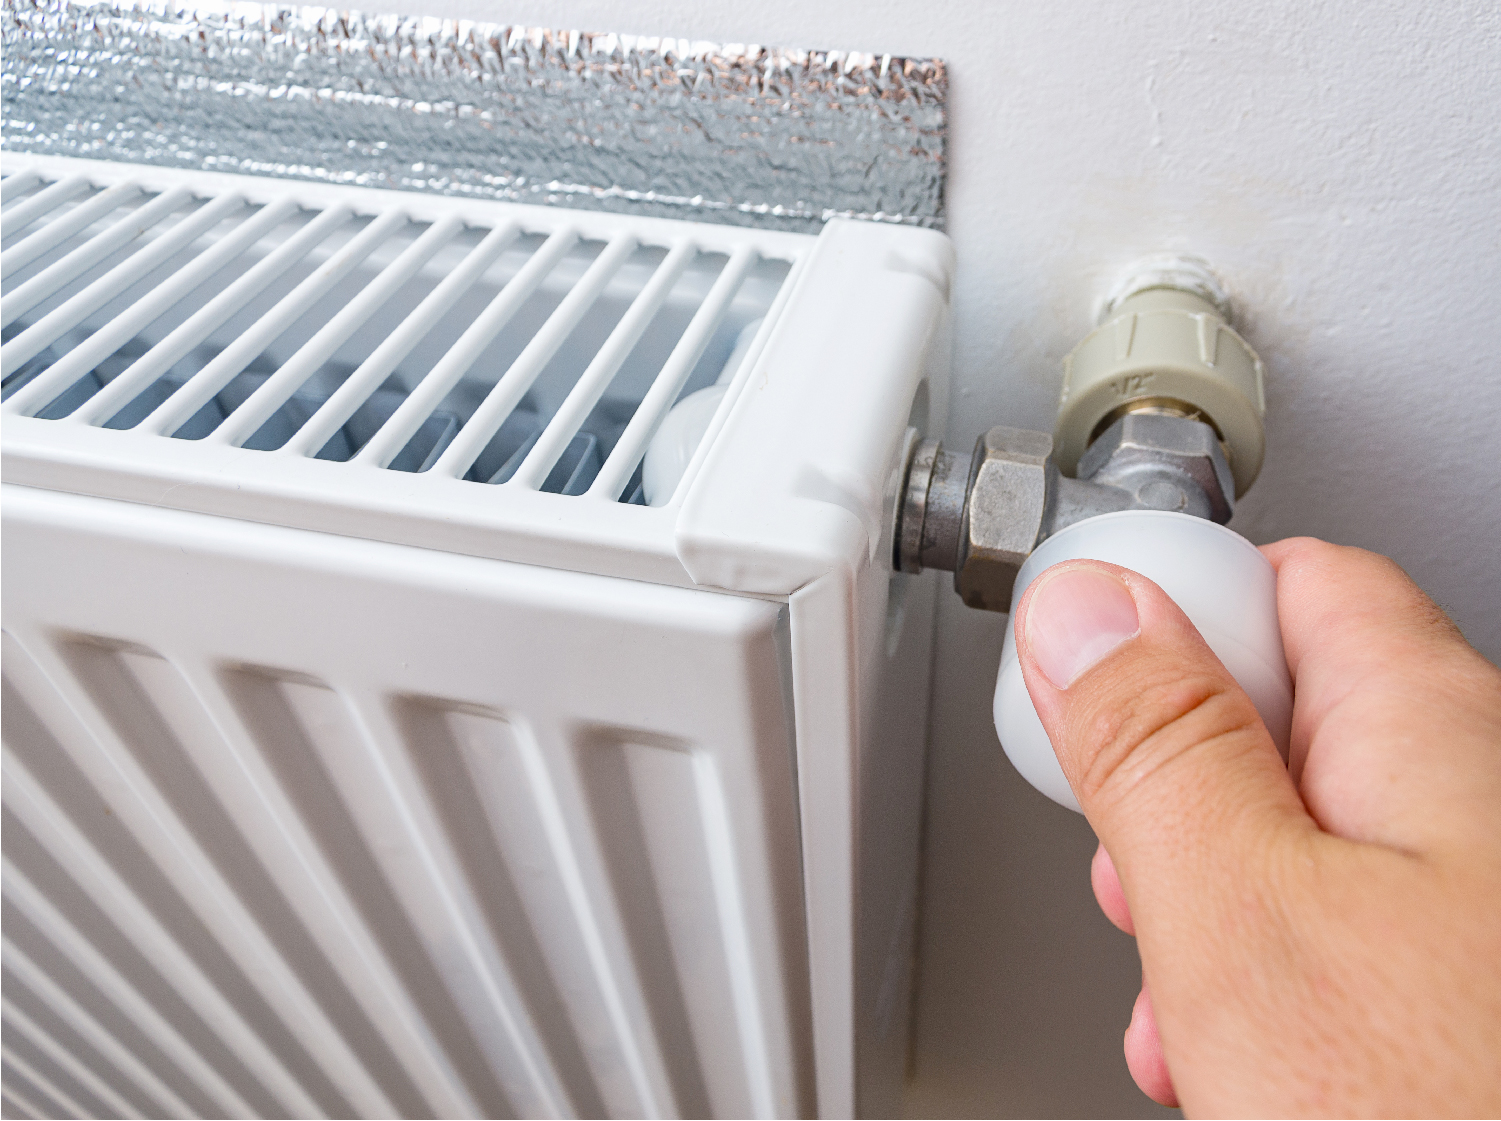 Reduce heating bills with radiator hacks